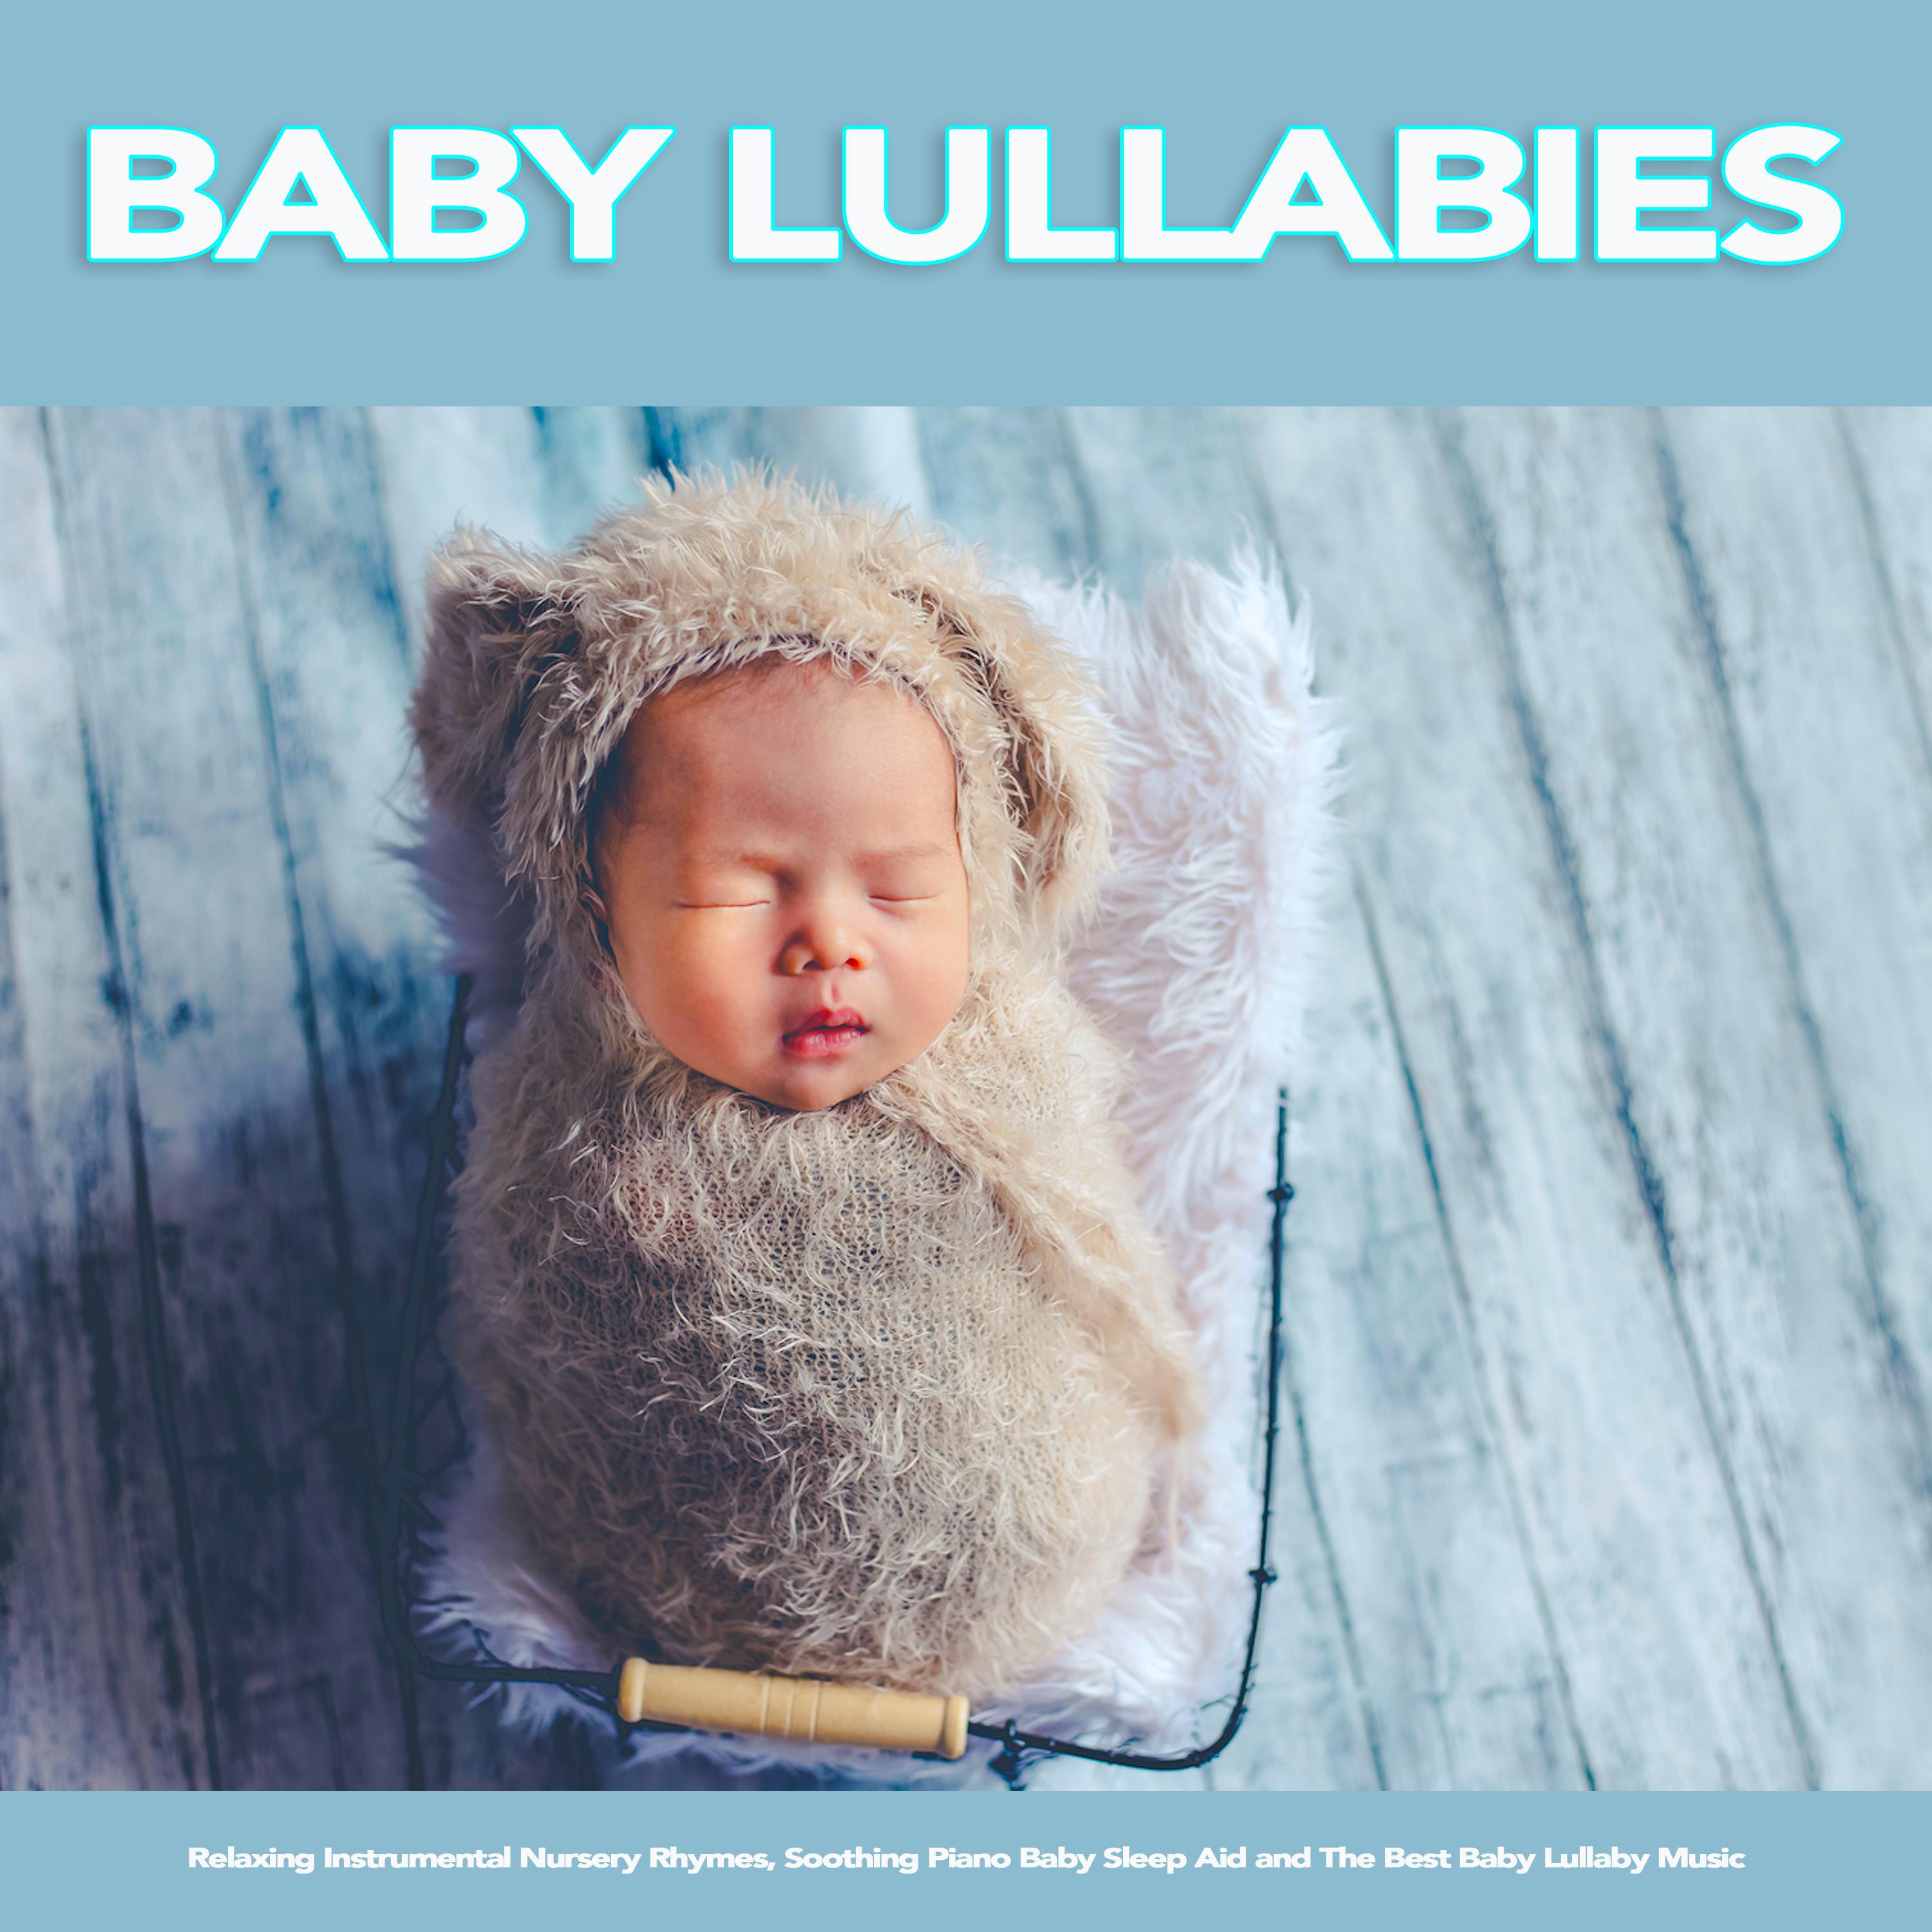 Alouette - Baby Lullabies and Nursery Rhymes For Baby Sleep